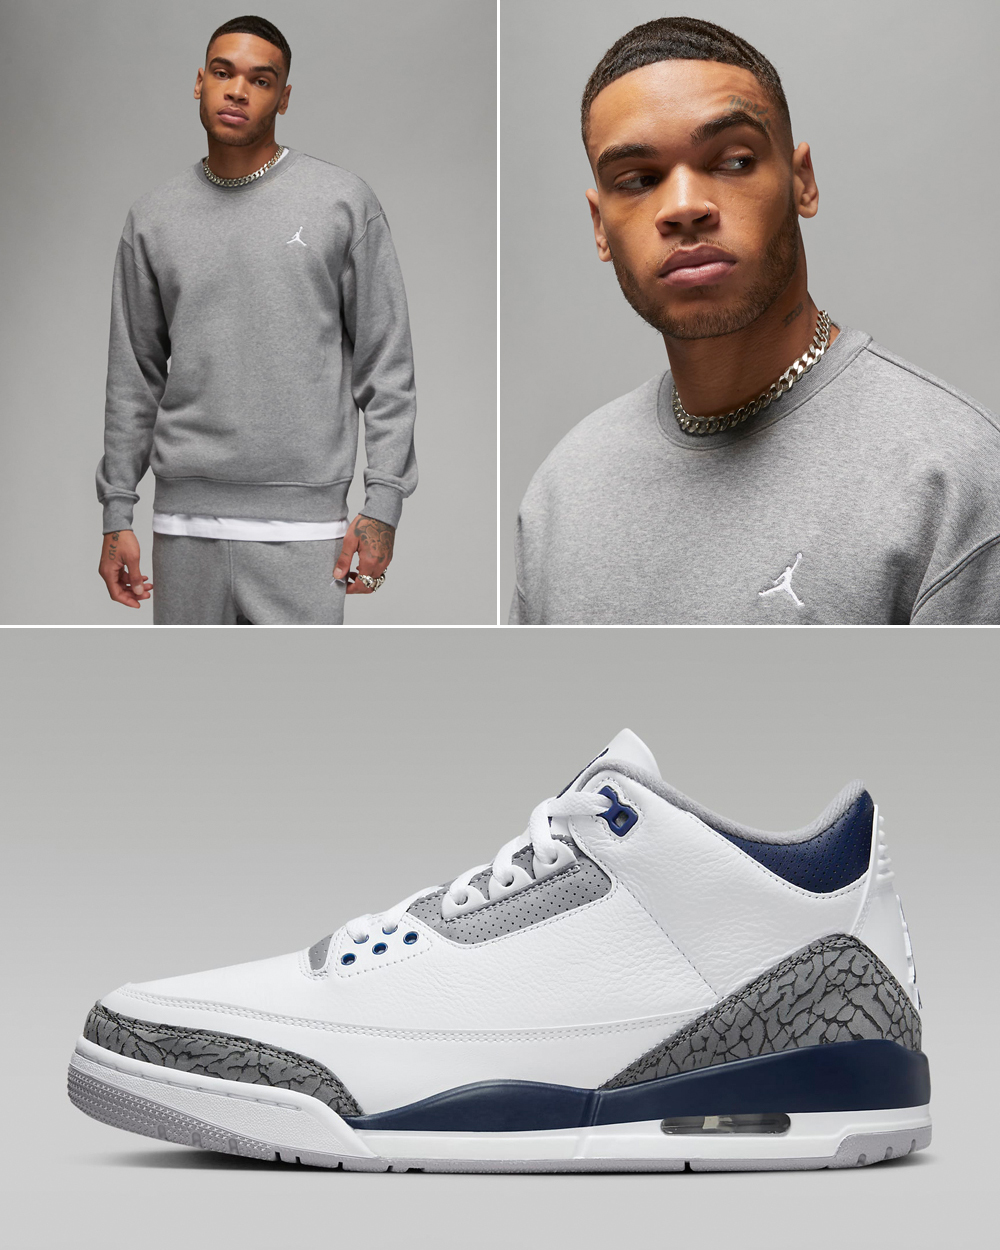 Air-Jordan-3-Midnight-Navy-Cement-Grey-Fleece-Sweatshirt